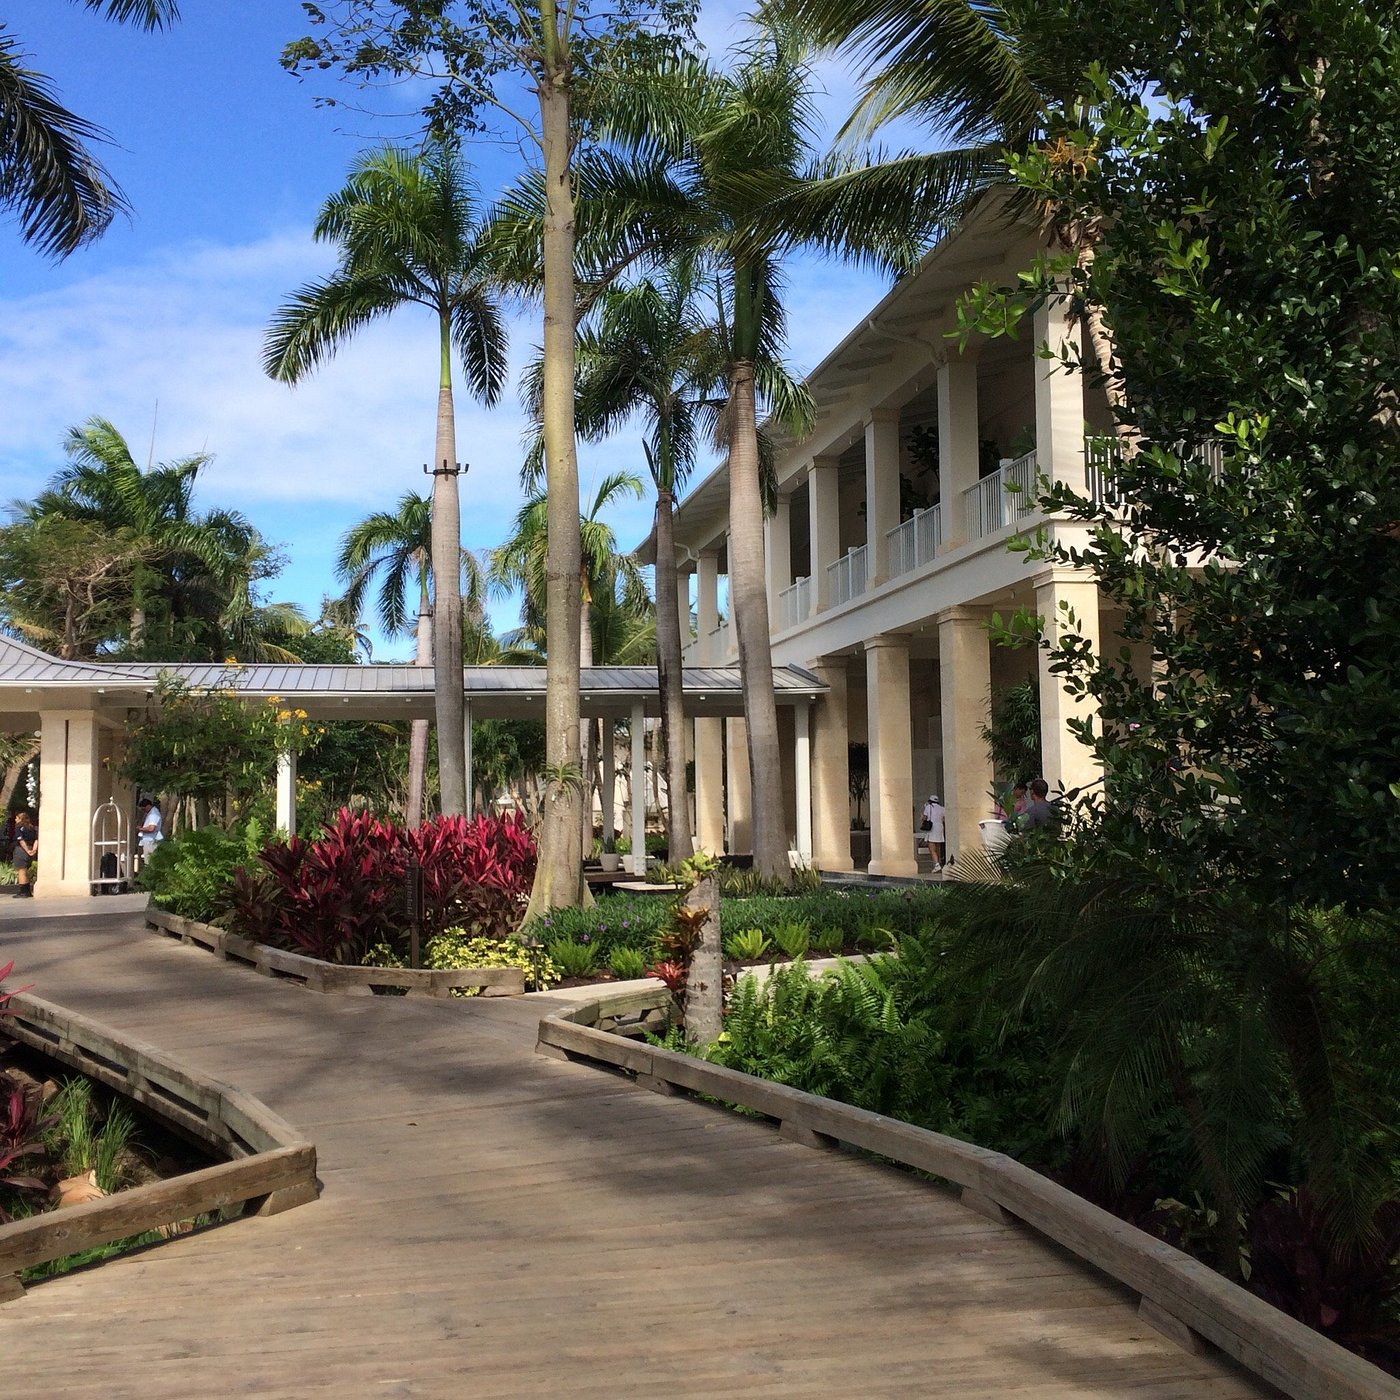 St. Regis Bahia Resort in Puerto Rico thumbnail